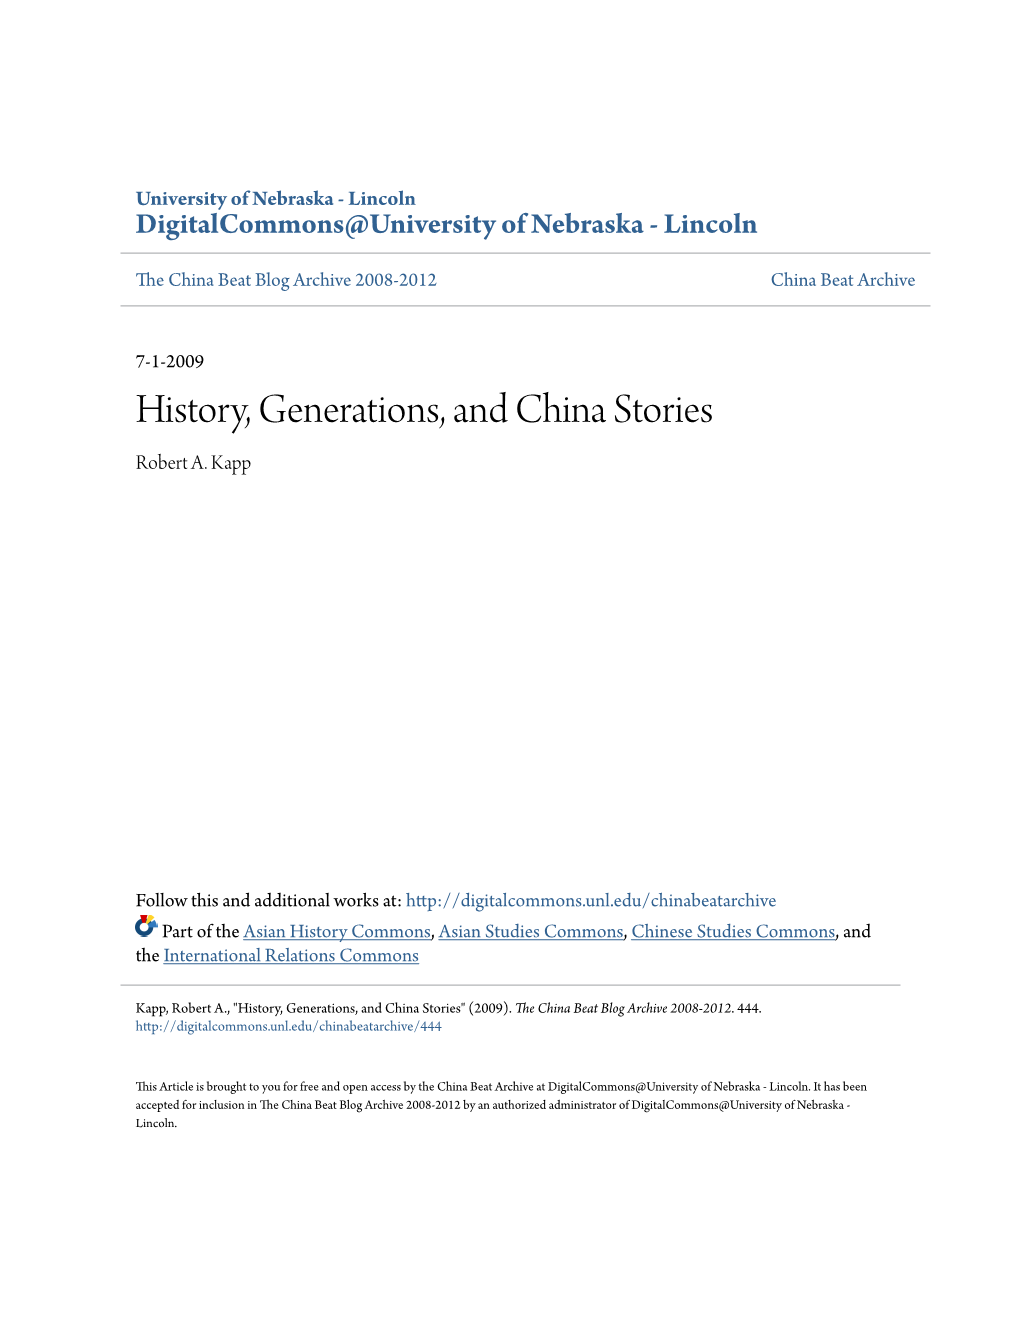 History, Generations, and China Stories Robert A